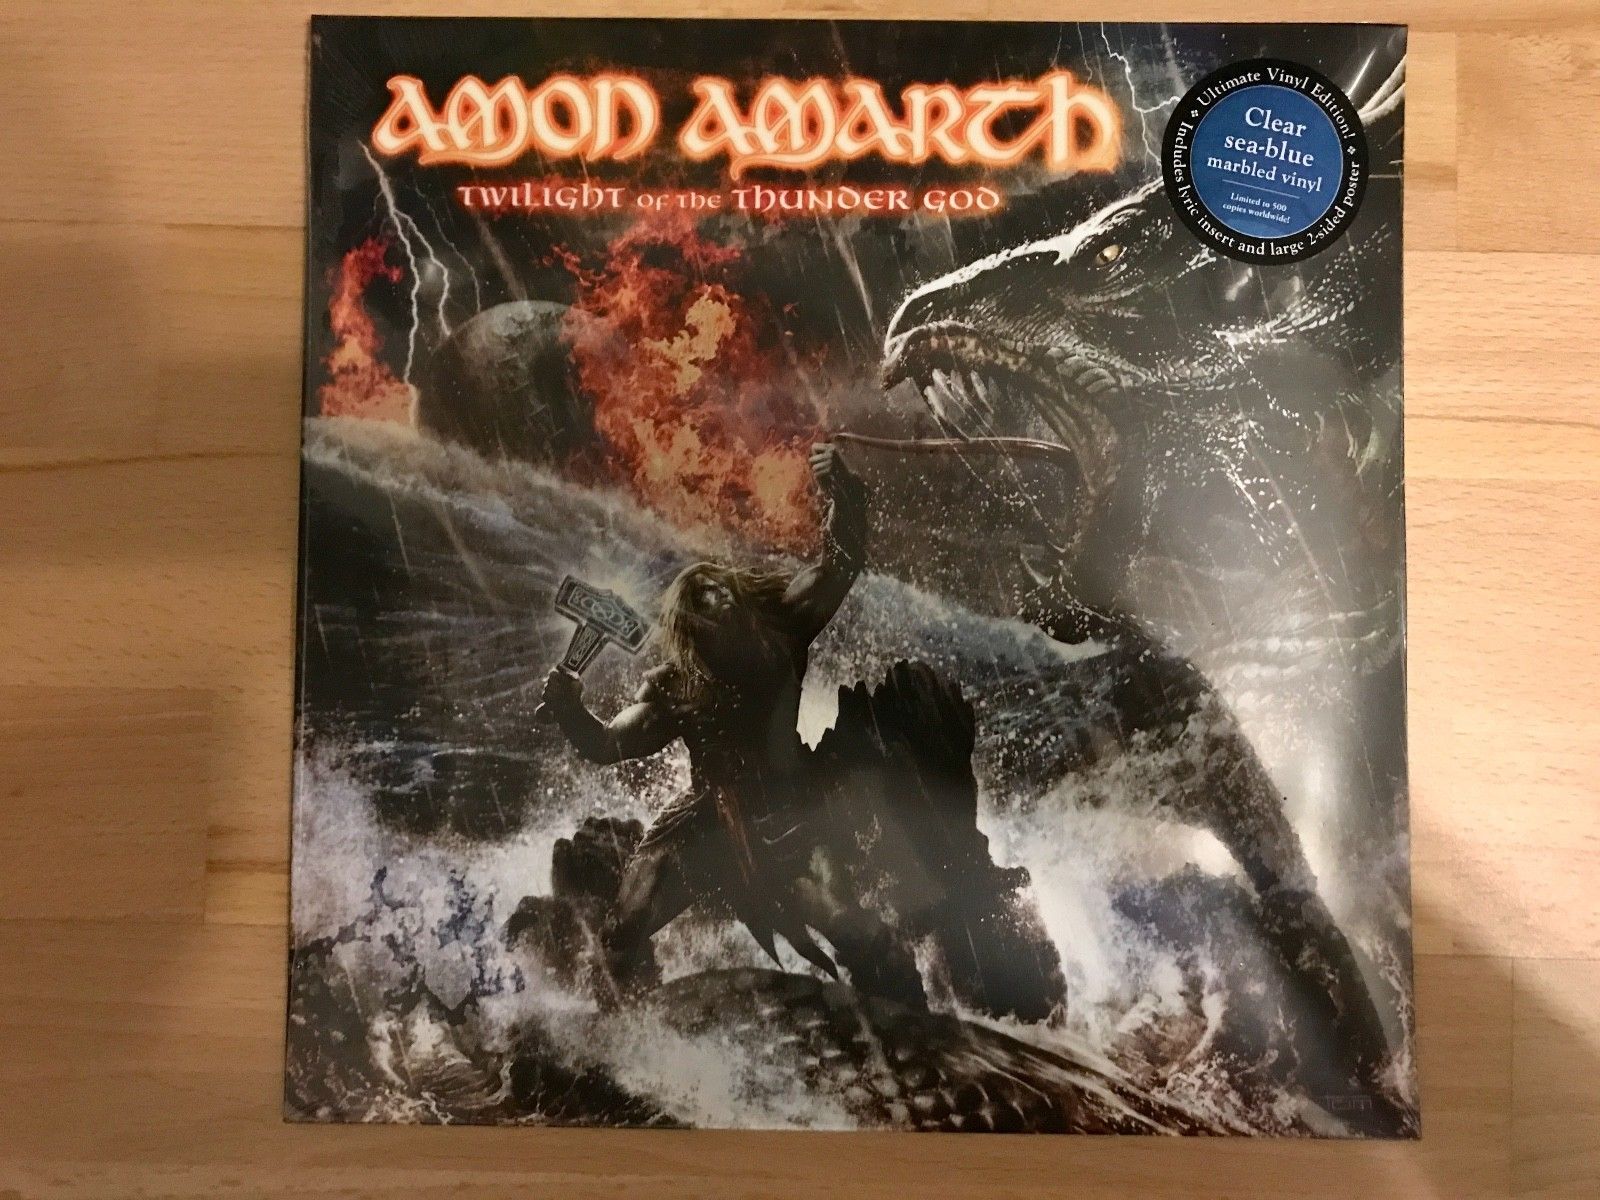  - Amon Amarth - Twilight Of The Thunder God - blue vinyl,  limited to 500 copies - auction details